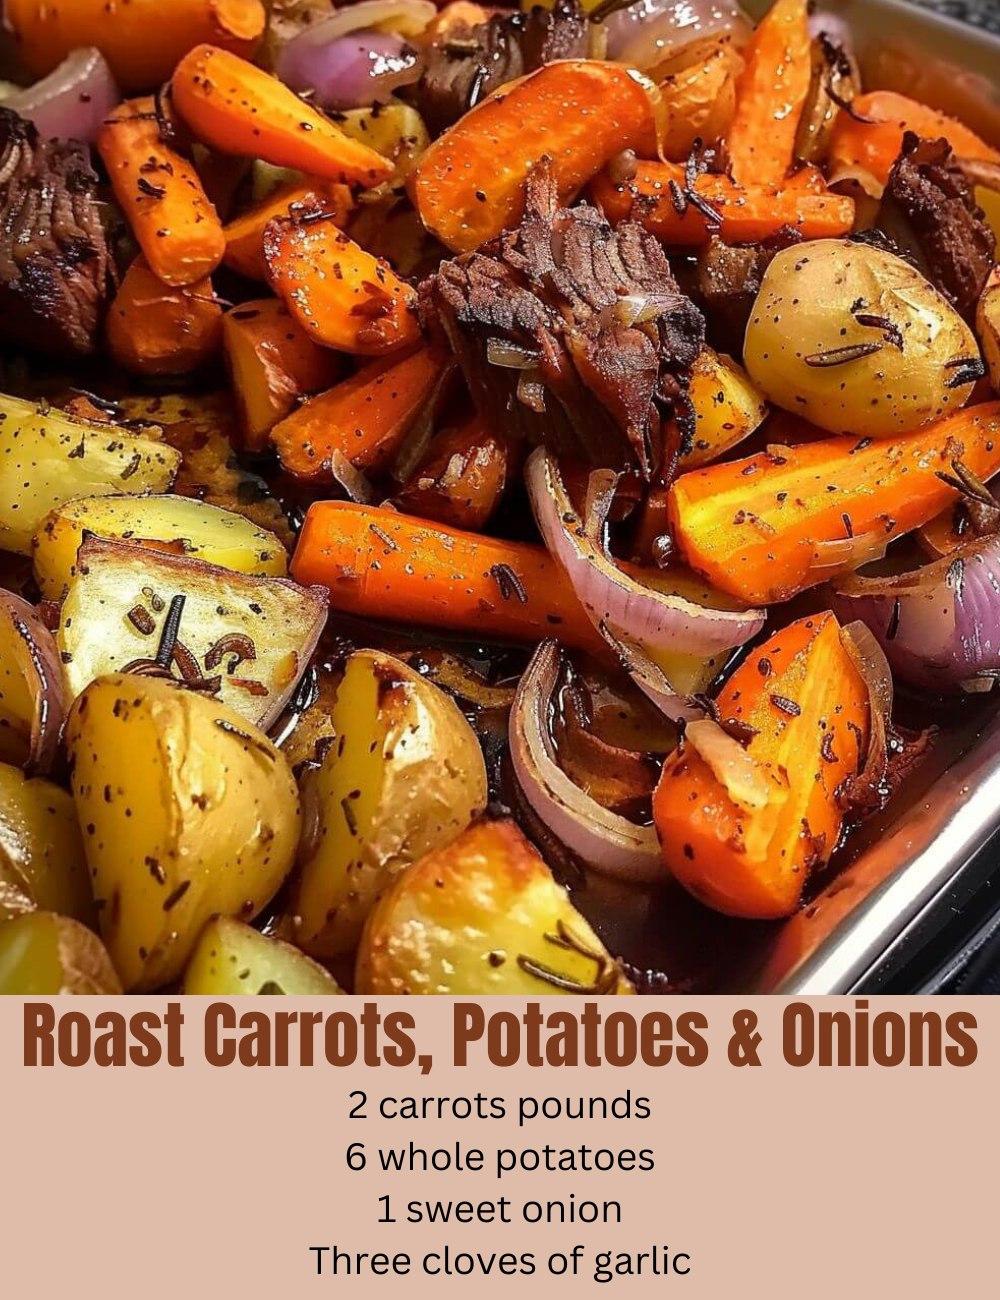 Roast Carrots, Potatoes & Onions